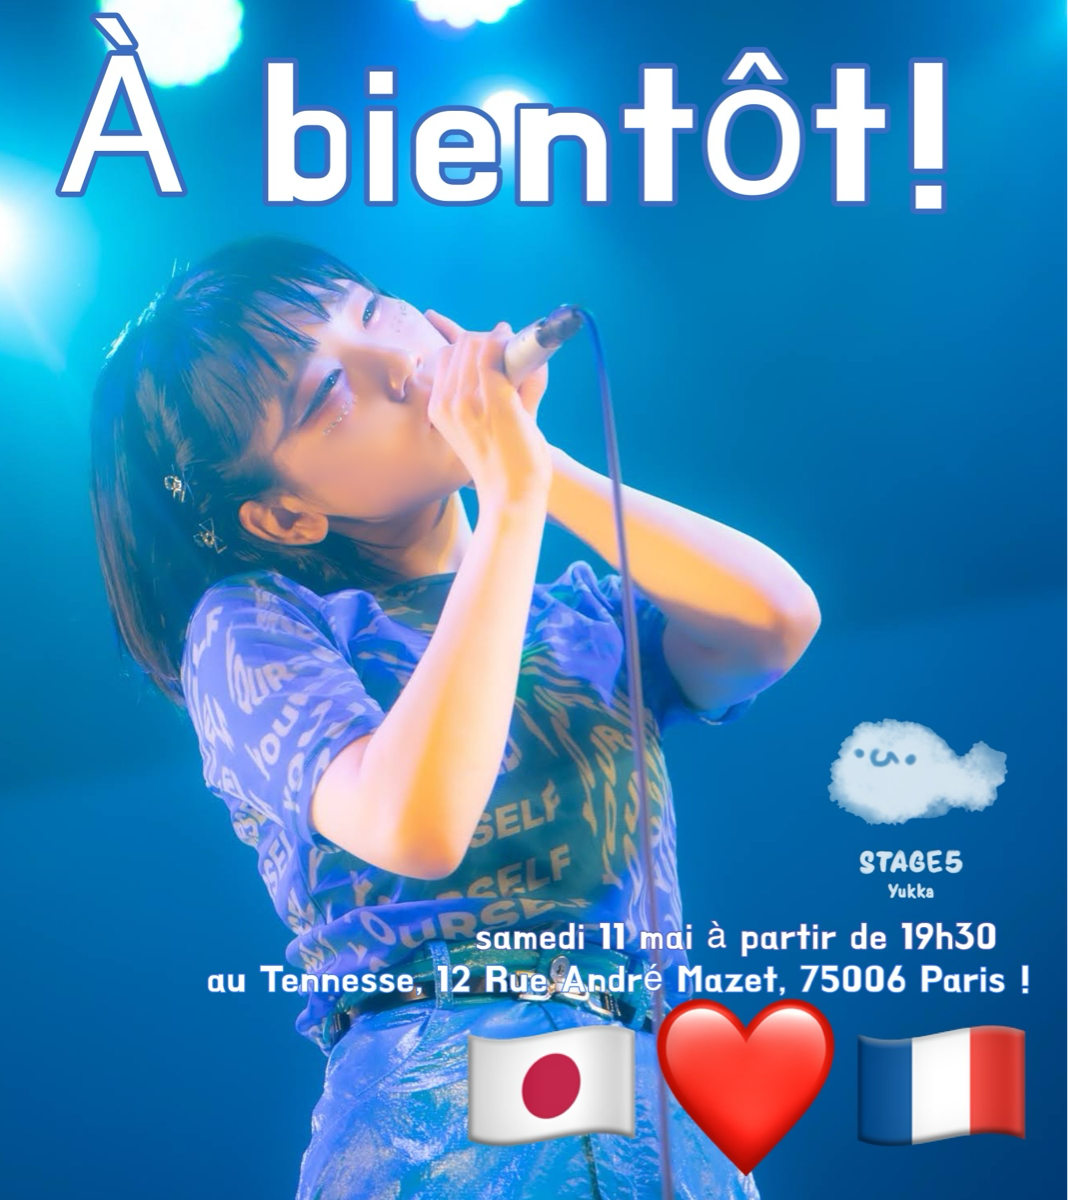 Concert in Paris!【Last show of STAGE5 EUROPE TOUR】